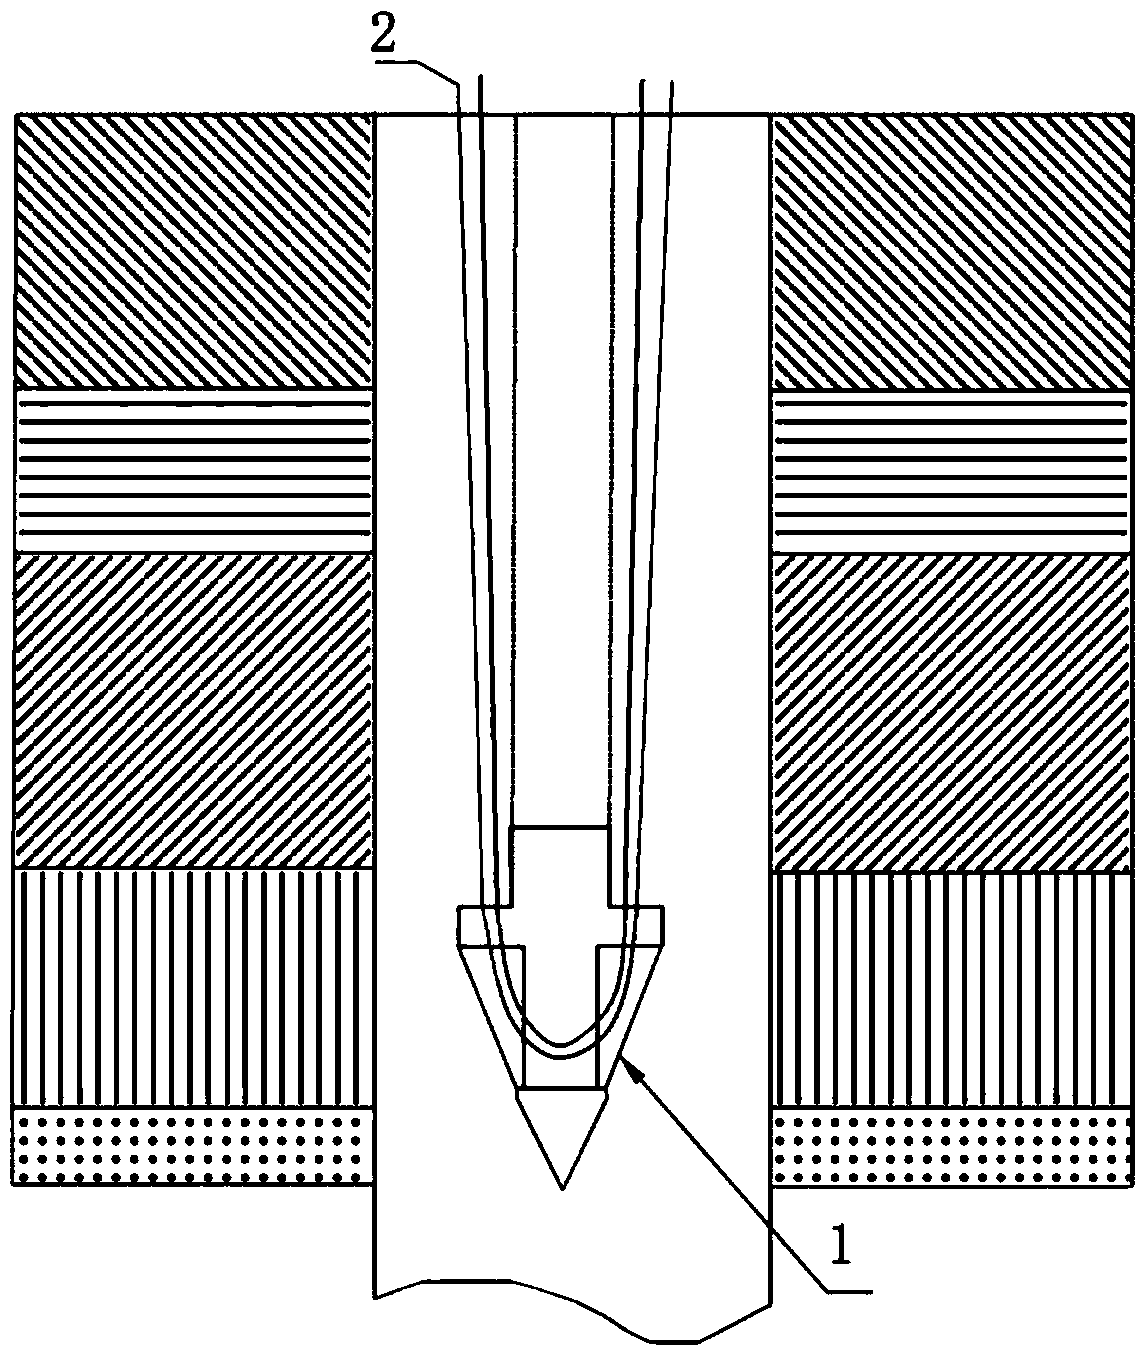 Borehole profile rock and soil mass layered deformation optical fiber measuring method